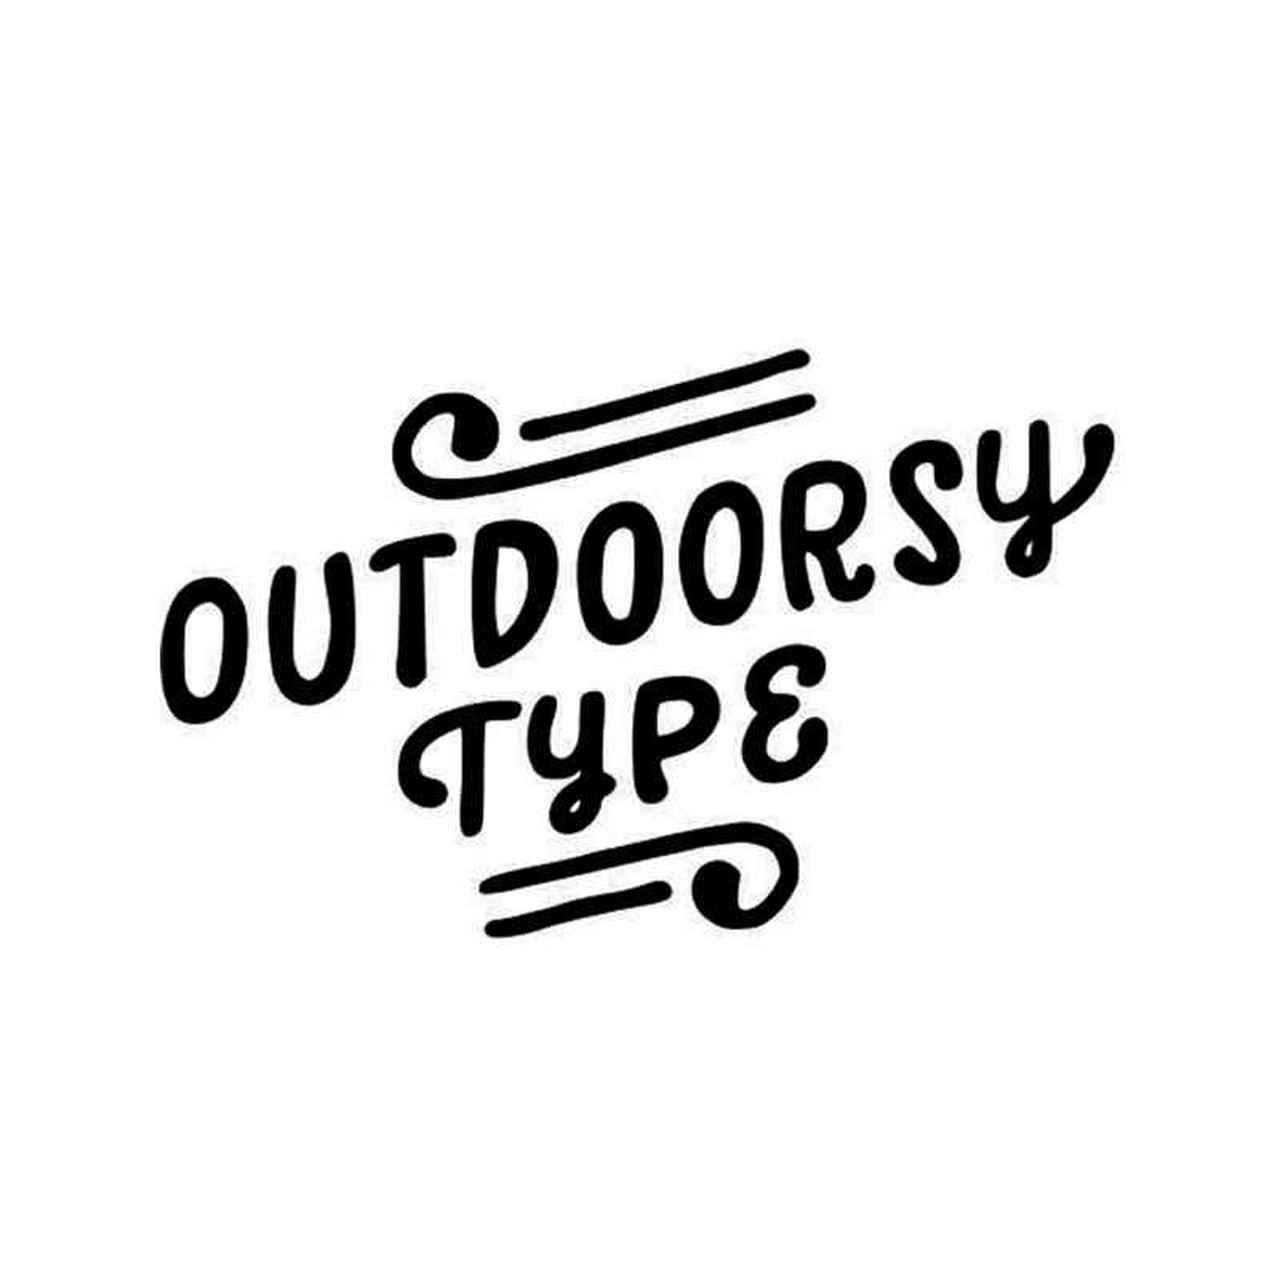 Outdoorsy Logo - Outdoorsy Type Adventure Outdoorsy Type Tumbler Cup Yeti Vinyl Sticker